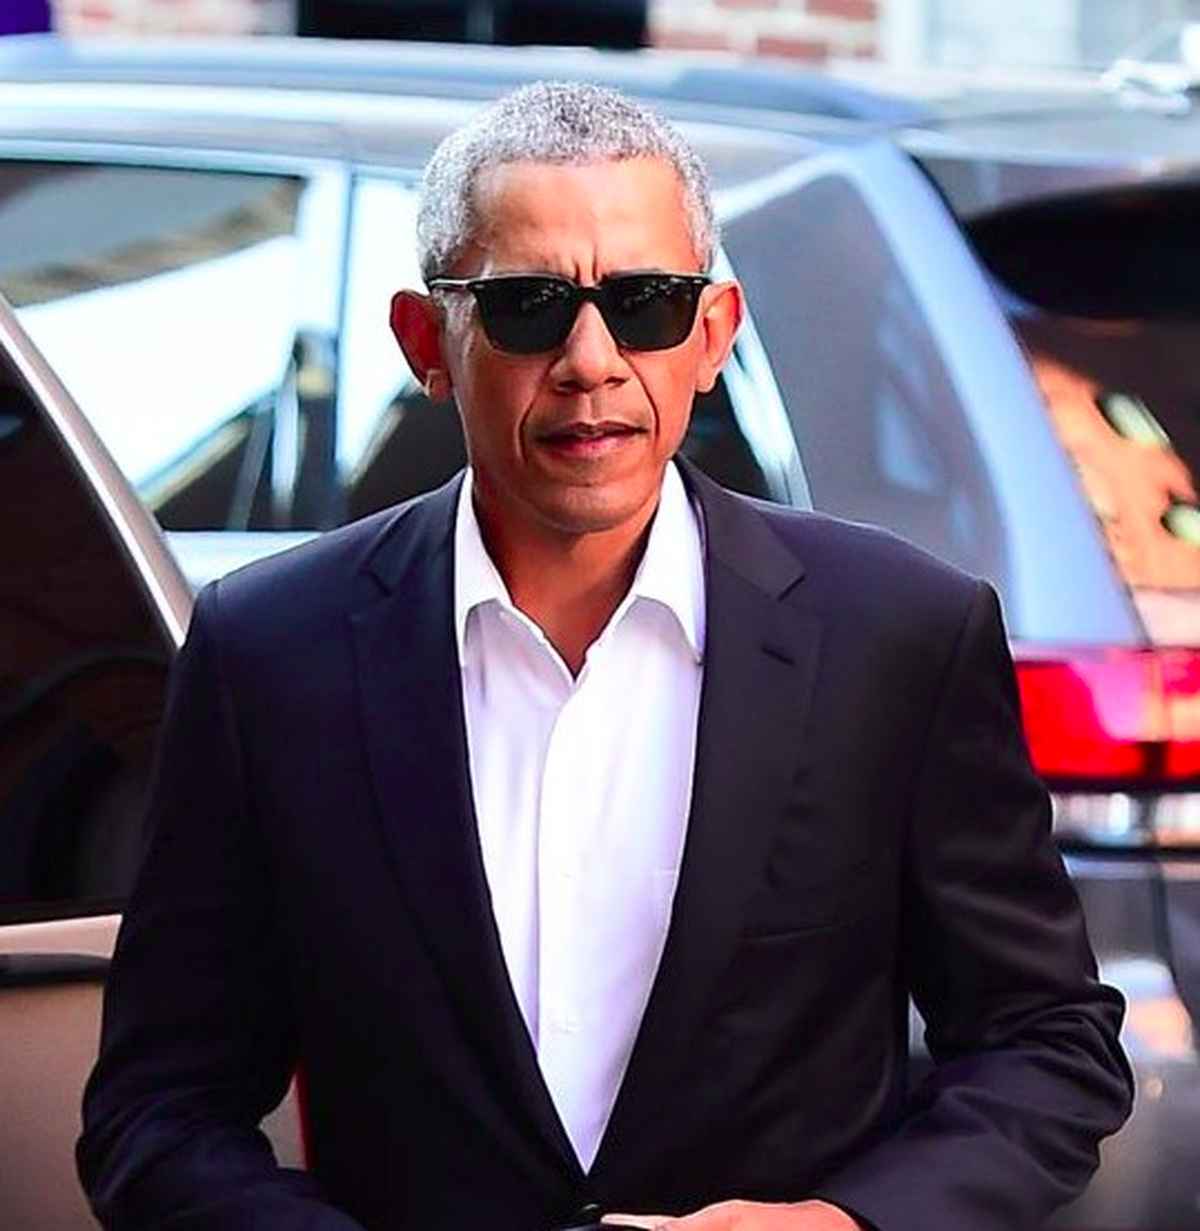 Portrait of President Barack Obama sporting his favorite sunglasses